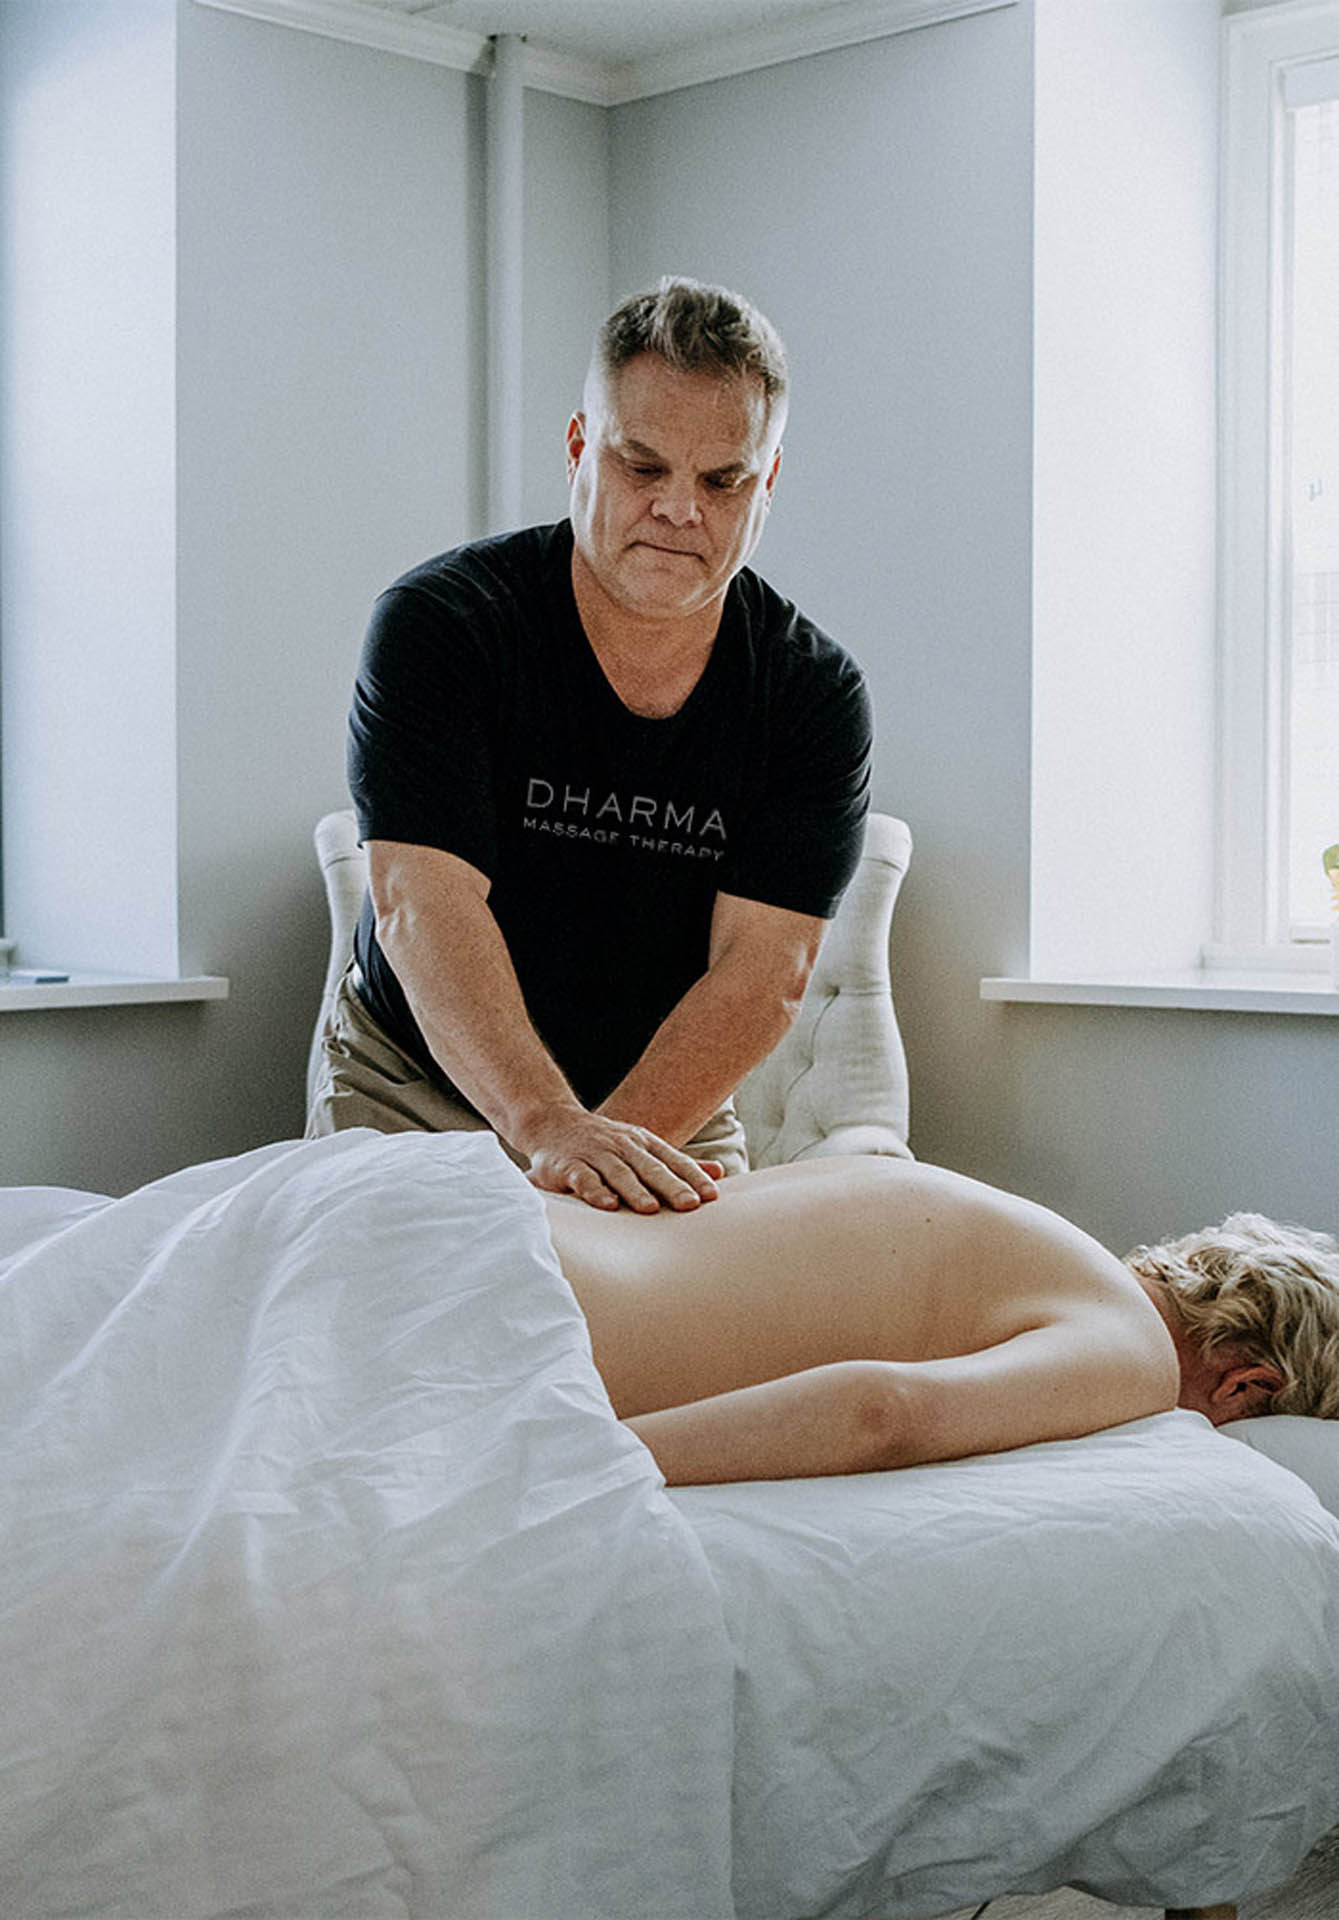 Massage therapist Mark massaging a woman on a table